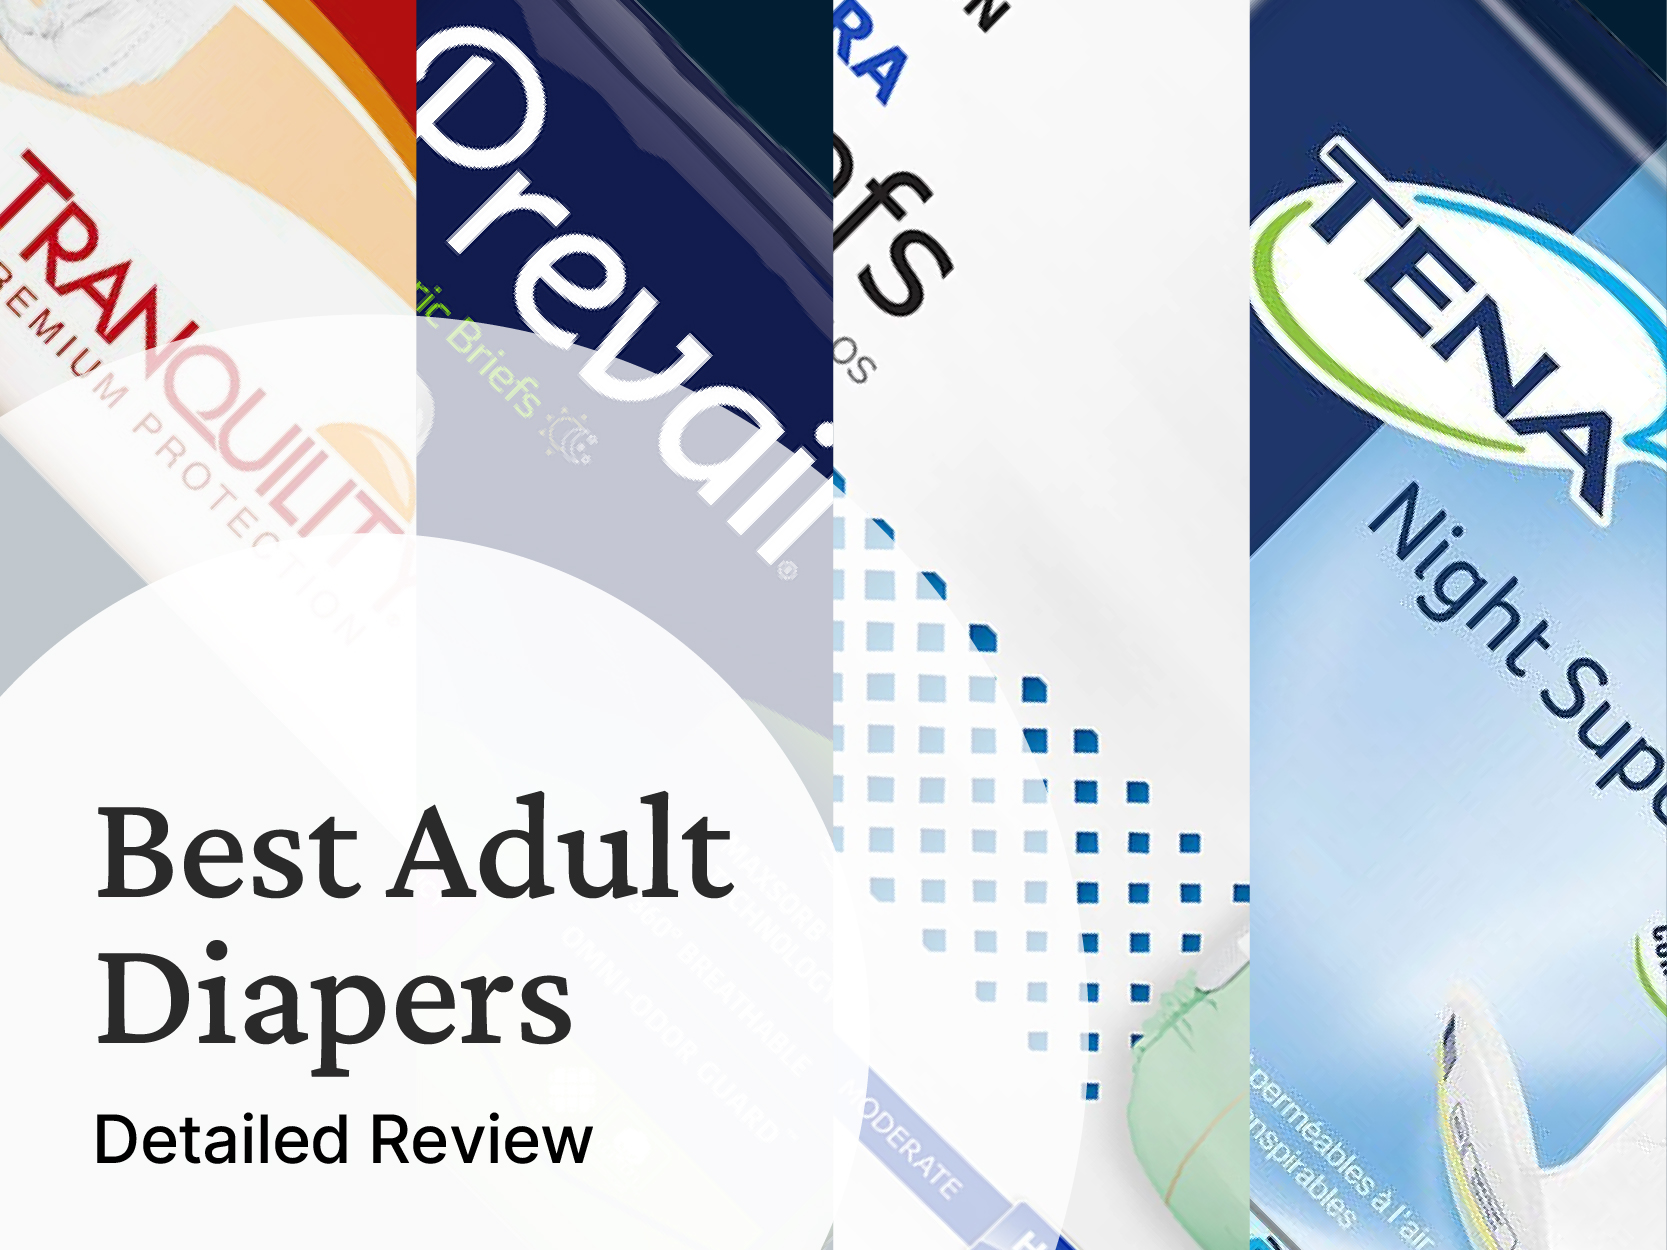 Prevail Air Plus Briefs Premium Adult Diapers